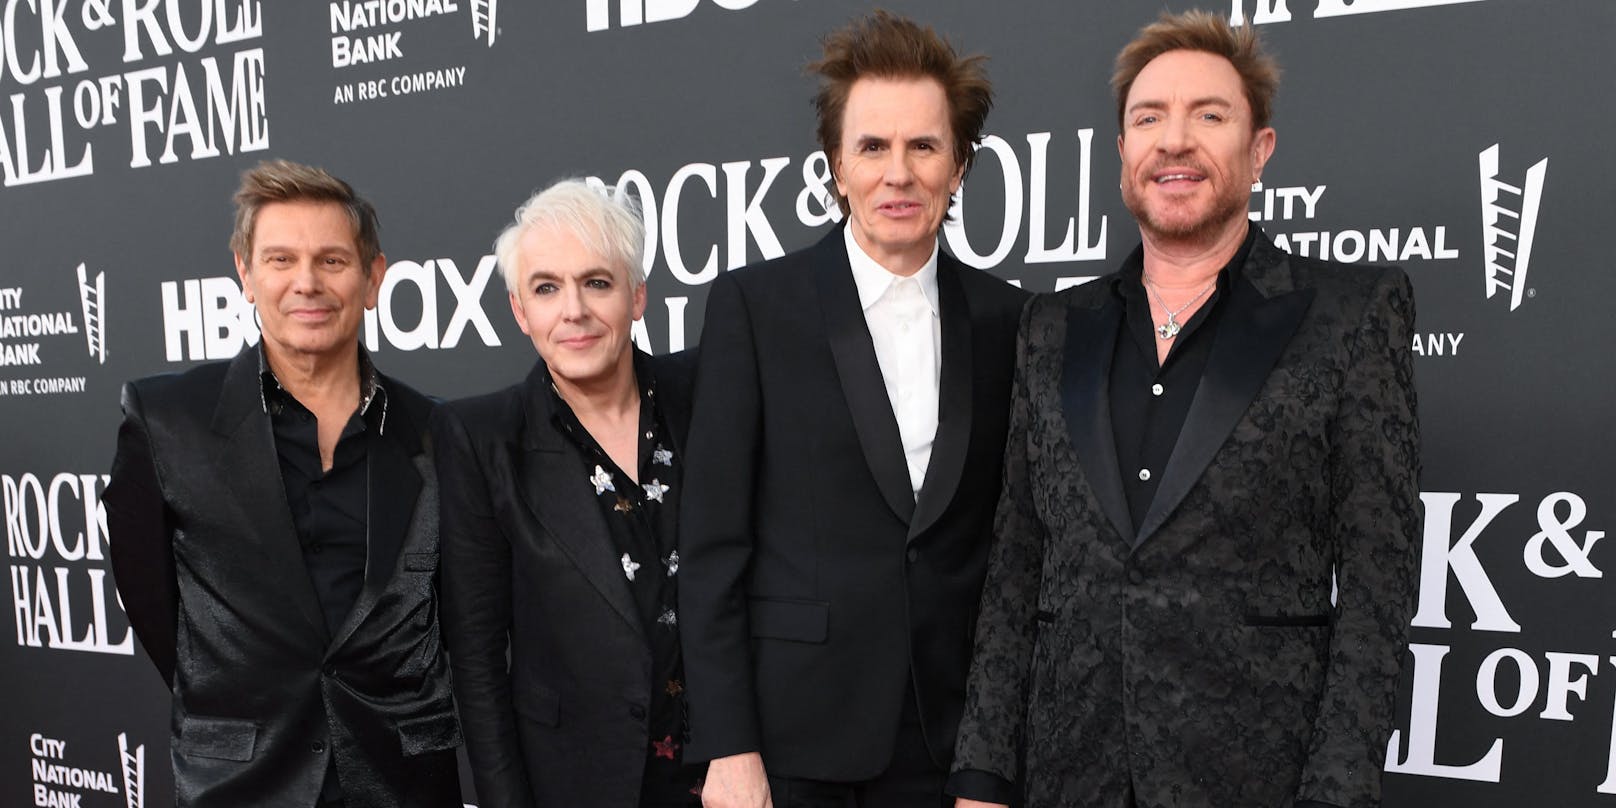 Roger Taylor, Nick Rhodes, John Taylor und Simon Le Bon (v.l.n.r.) von <strong>Duran Duran</strong>.